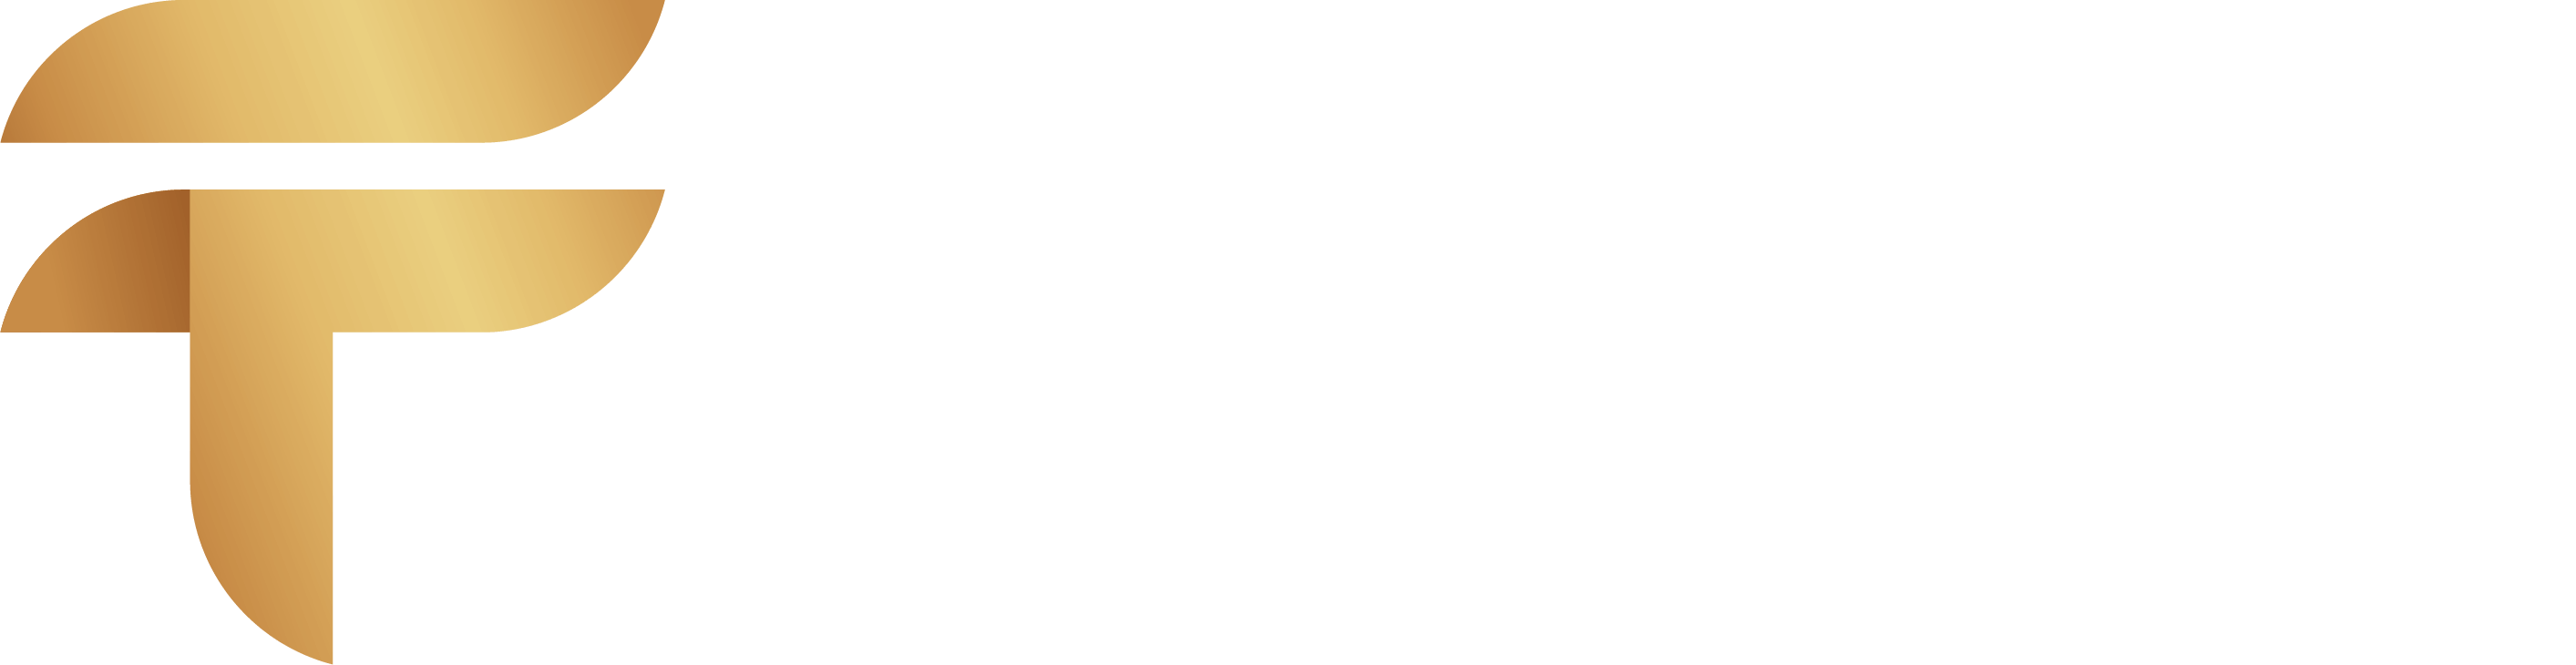 fovty logo new